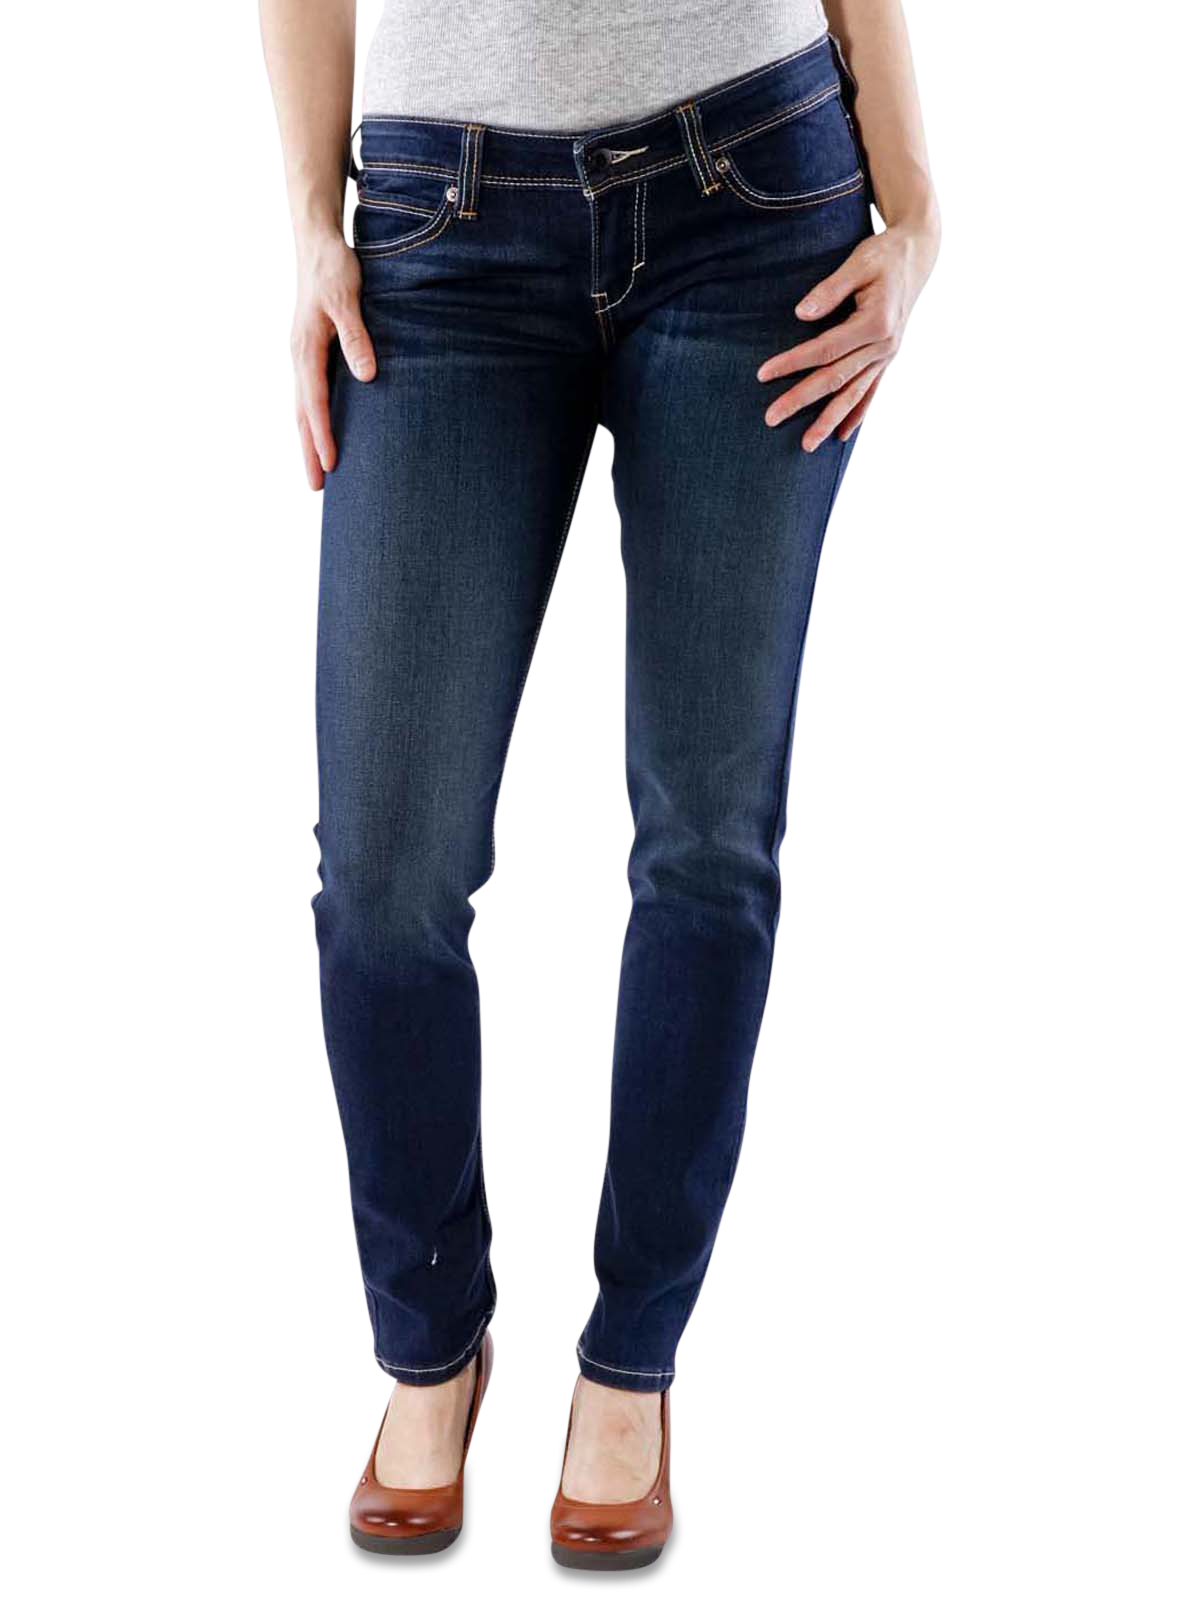 Png transparent images all. Clipart woman jeans